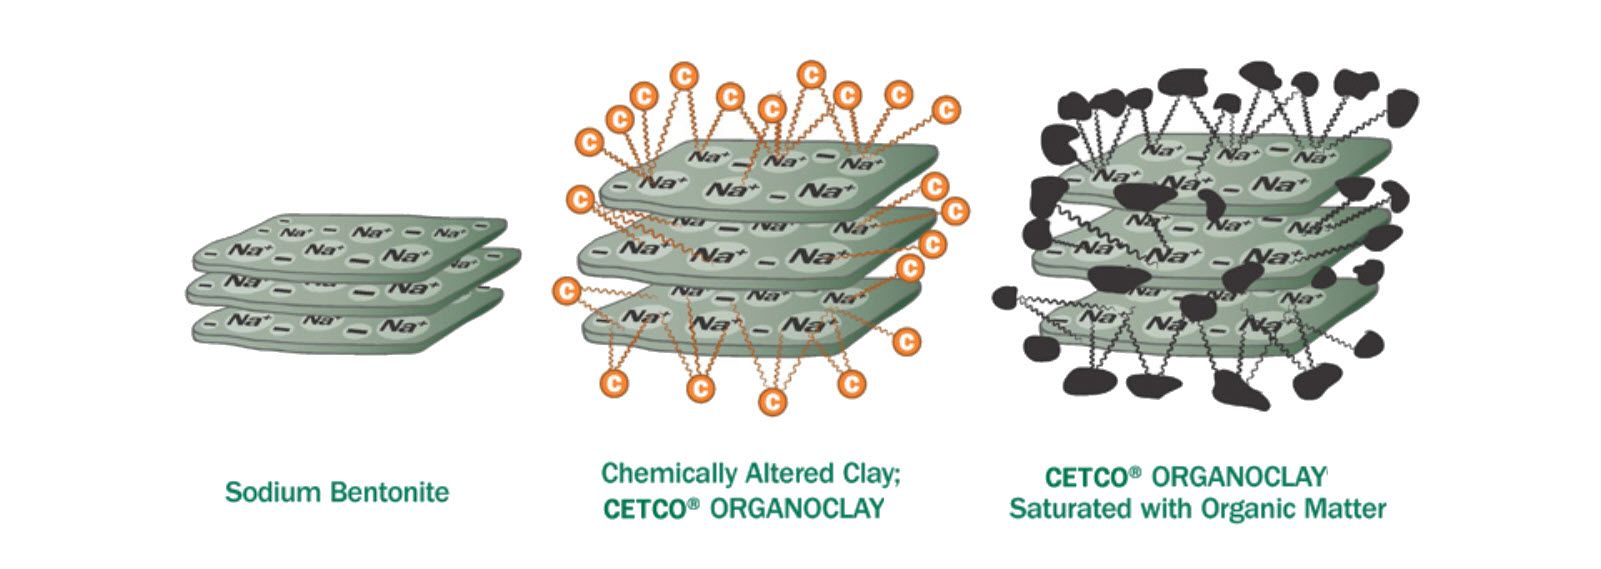 organoclay-saturated-organic-matter-diagram-cetco